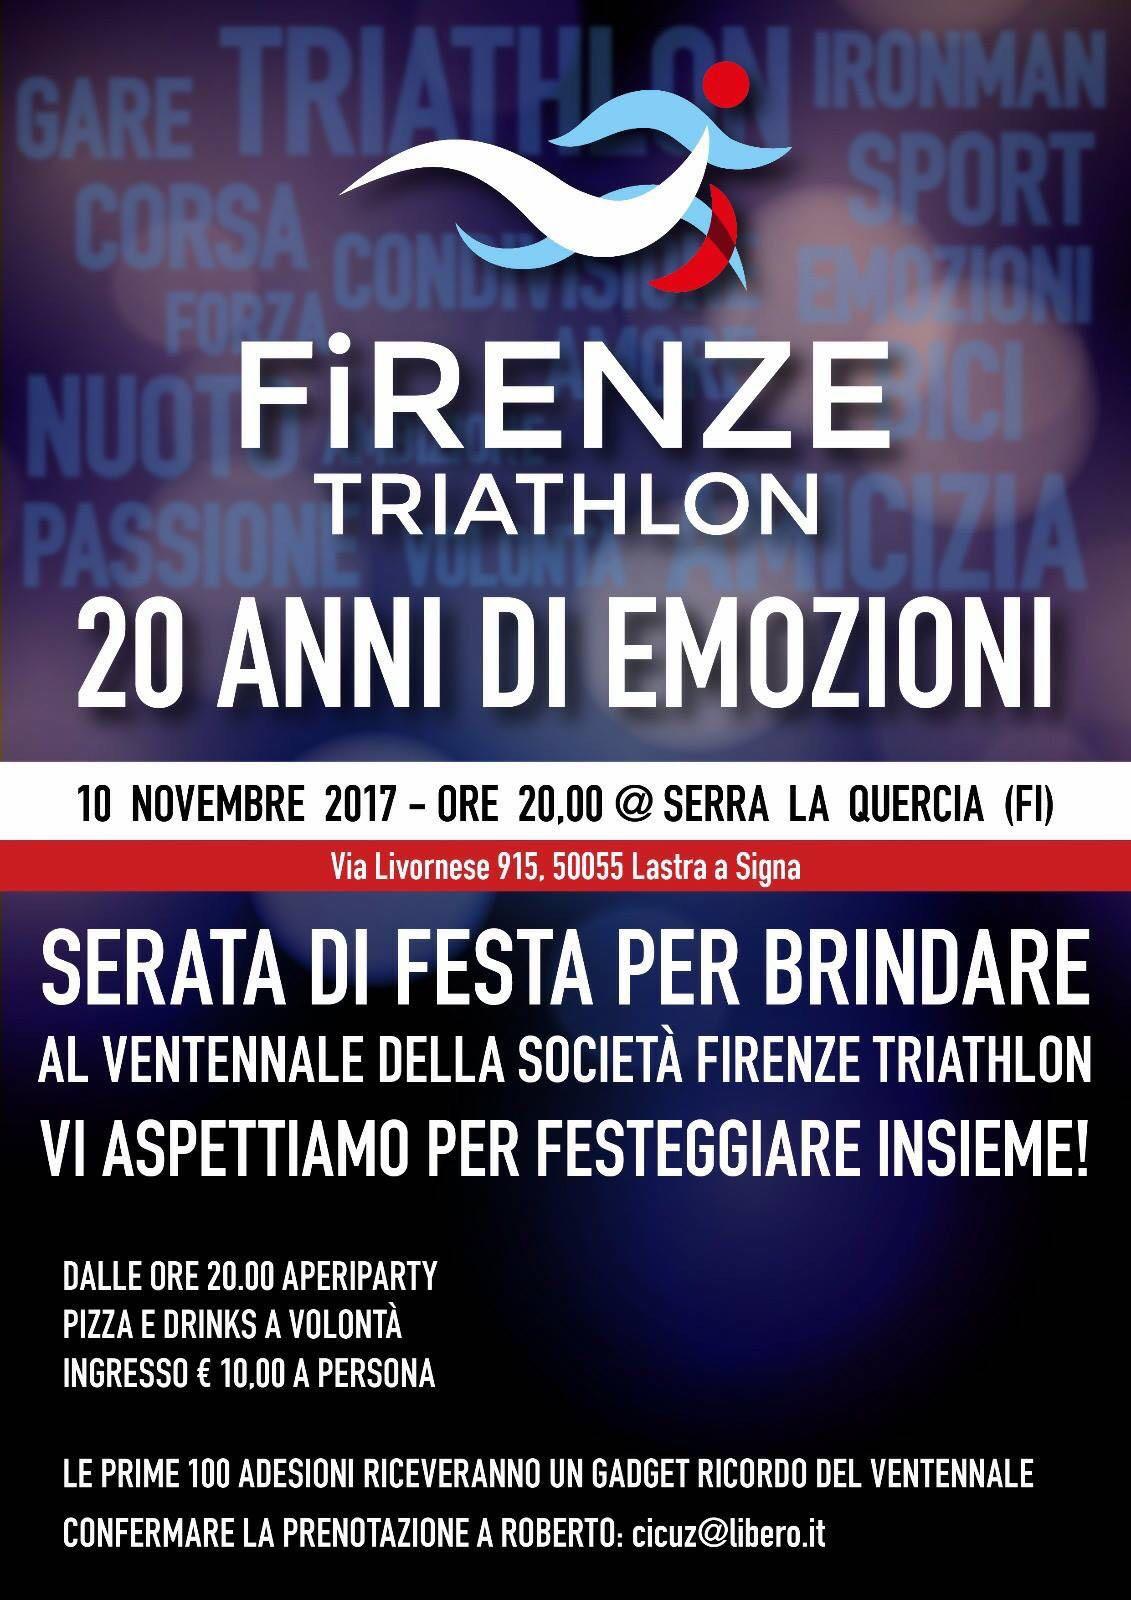 images/toscana/medium/20_anni_Firenze_Triathlon.JPG